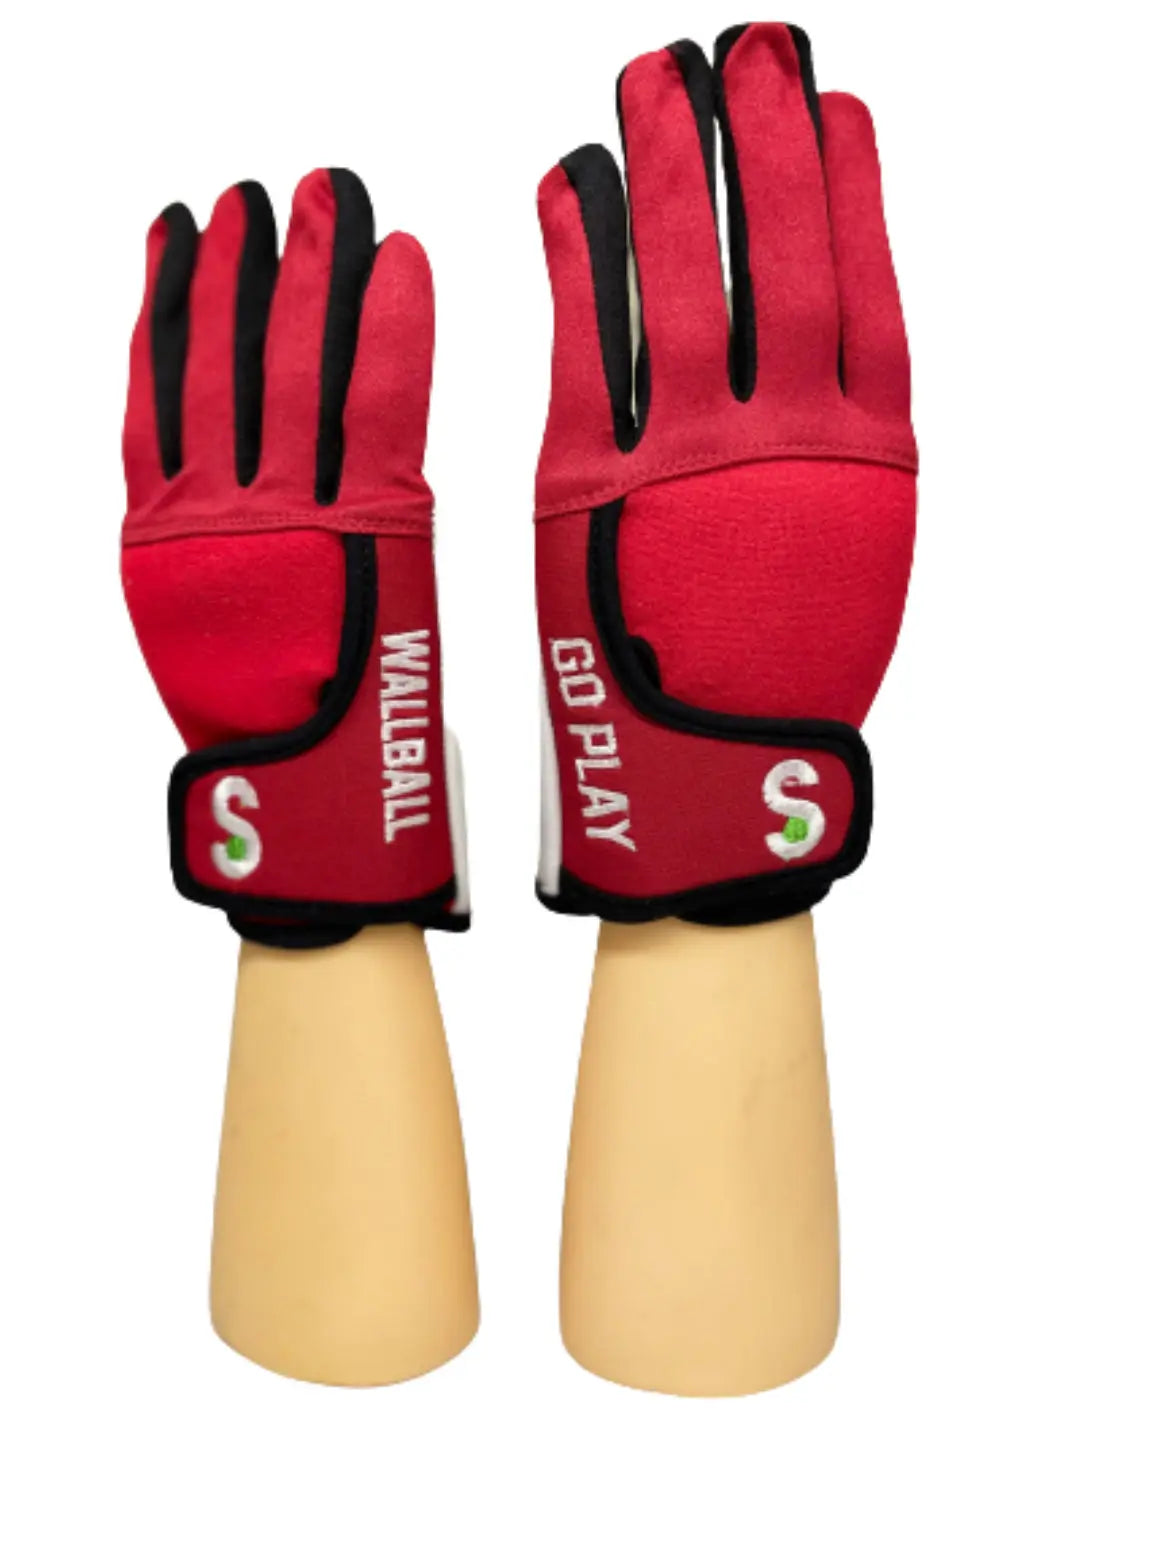 KOTC PRO Gloves MAROON | RED Unpadded Palms - New York Handball Store Corp